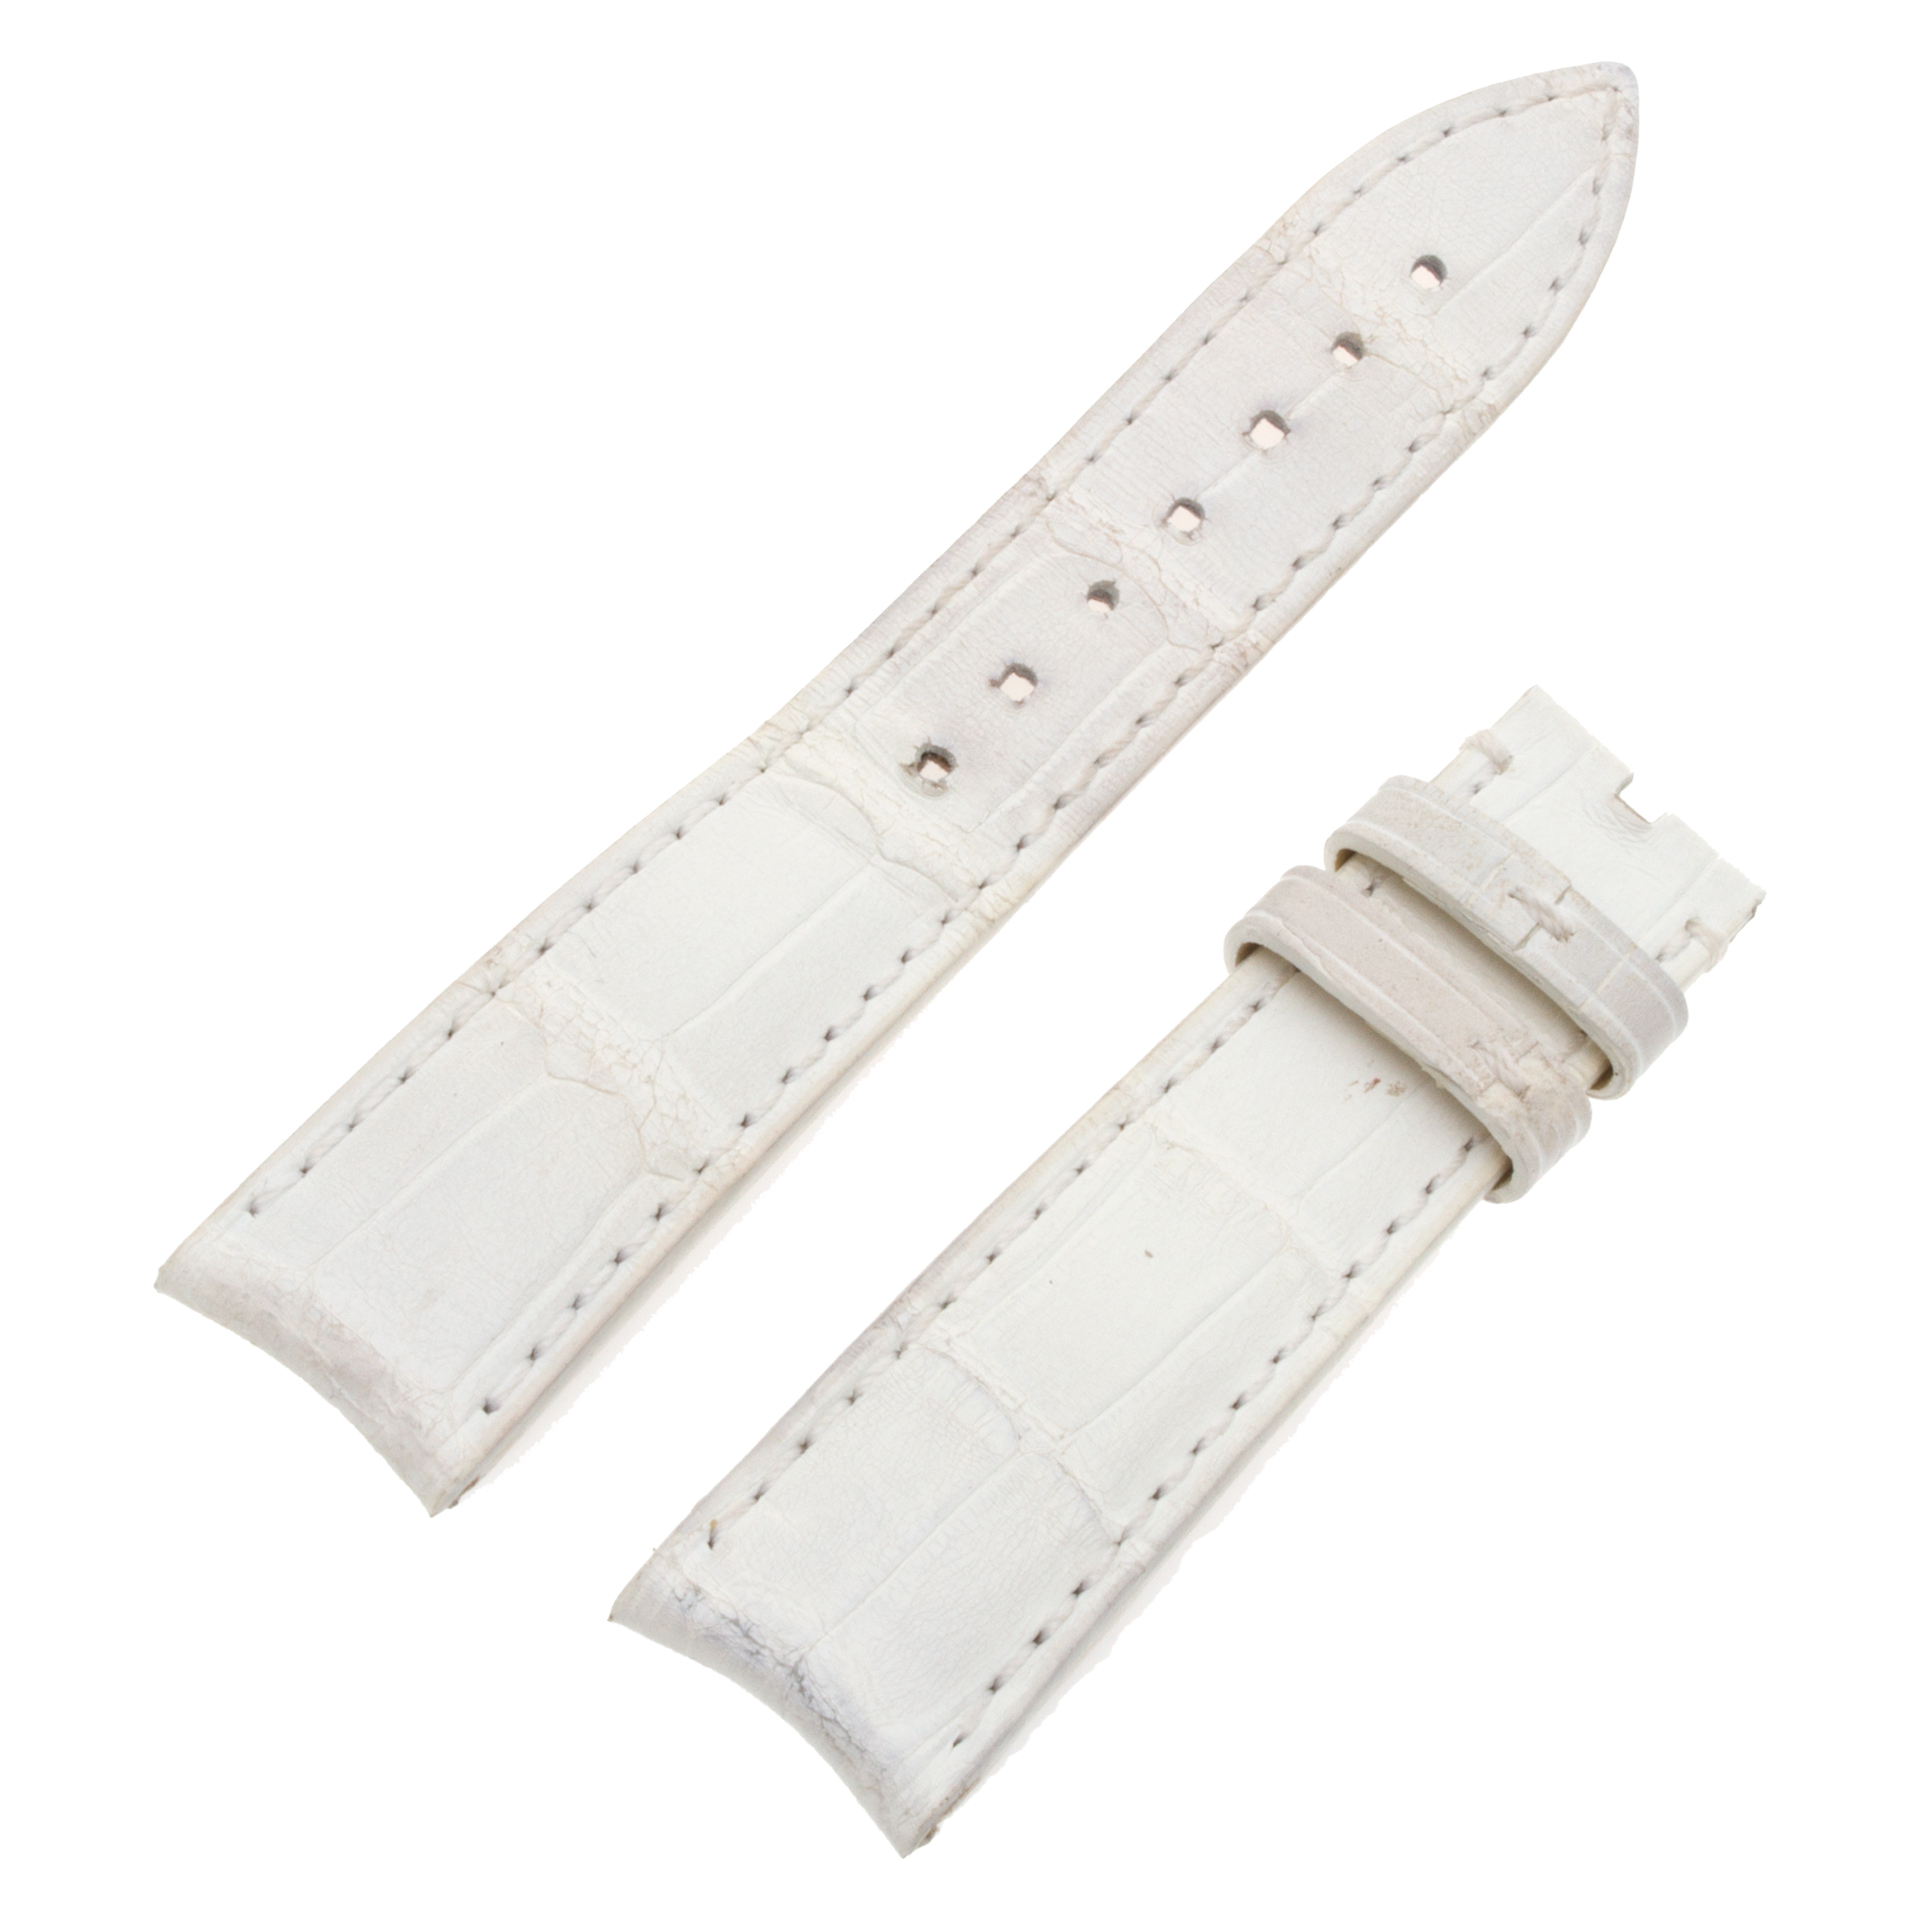 Backes & Strauss white alligator strap (18x16)